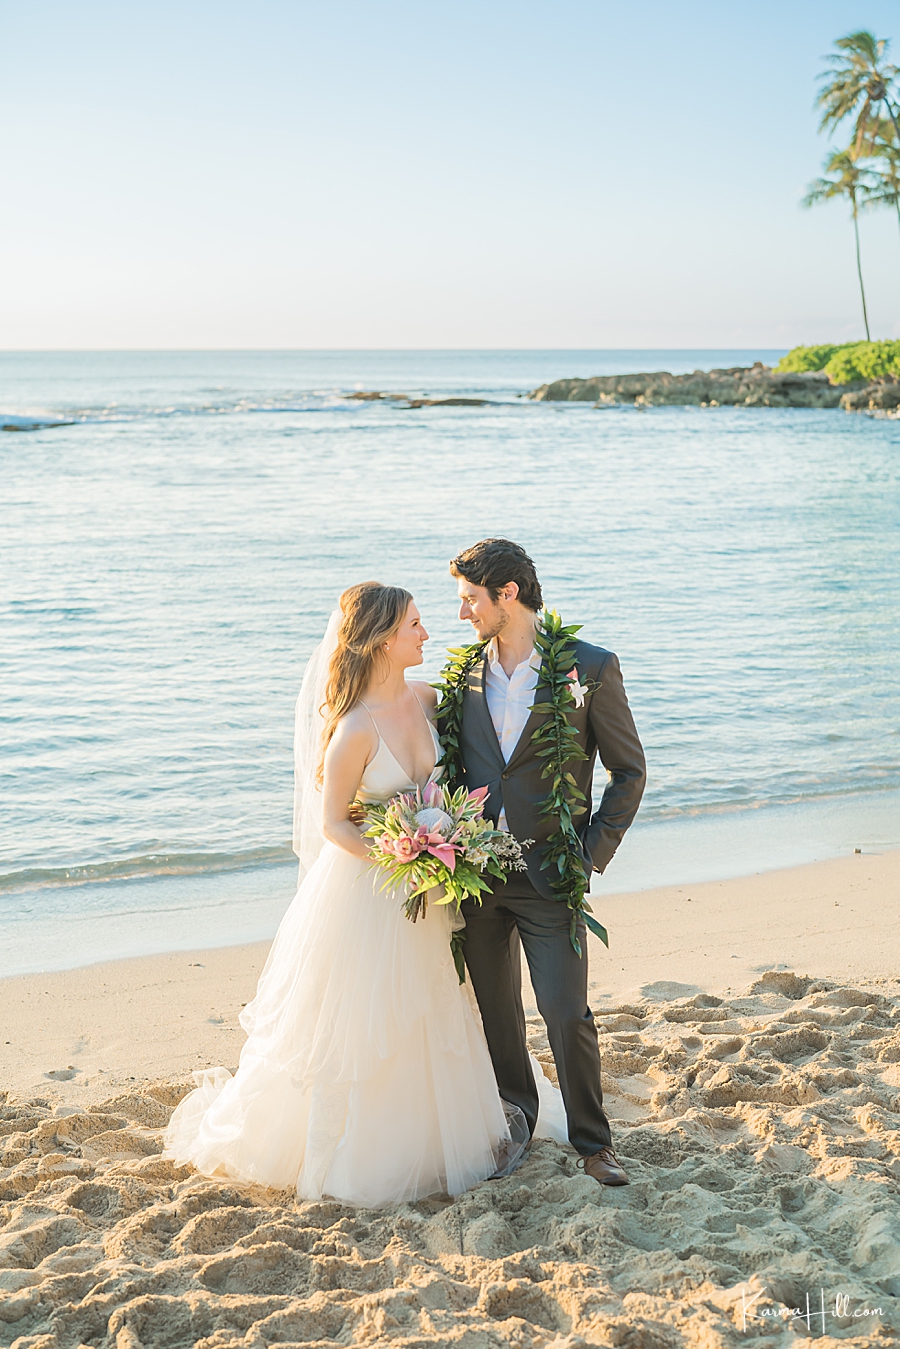 Wedding planners Oahu
